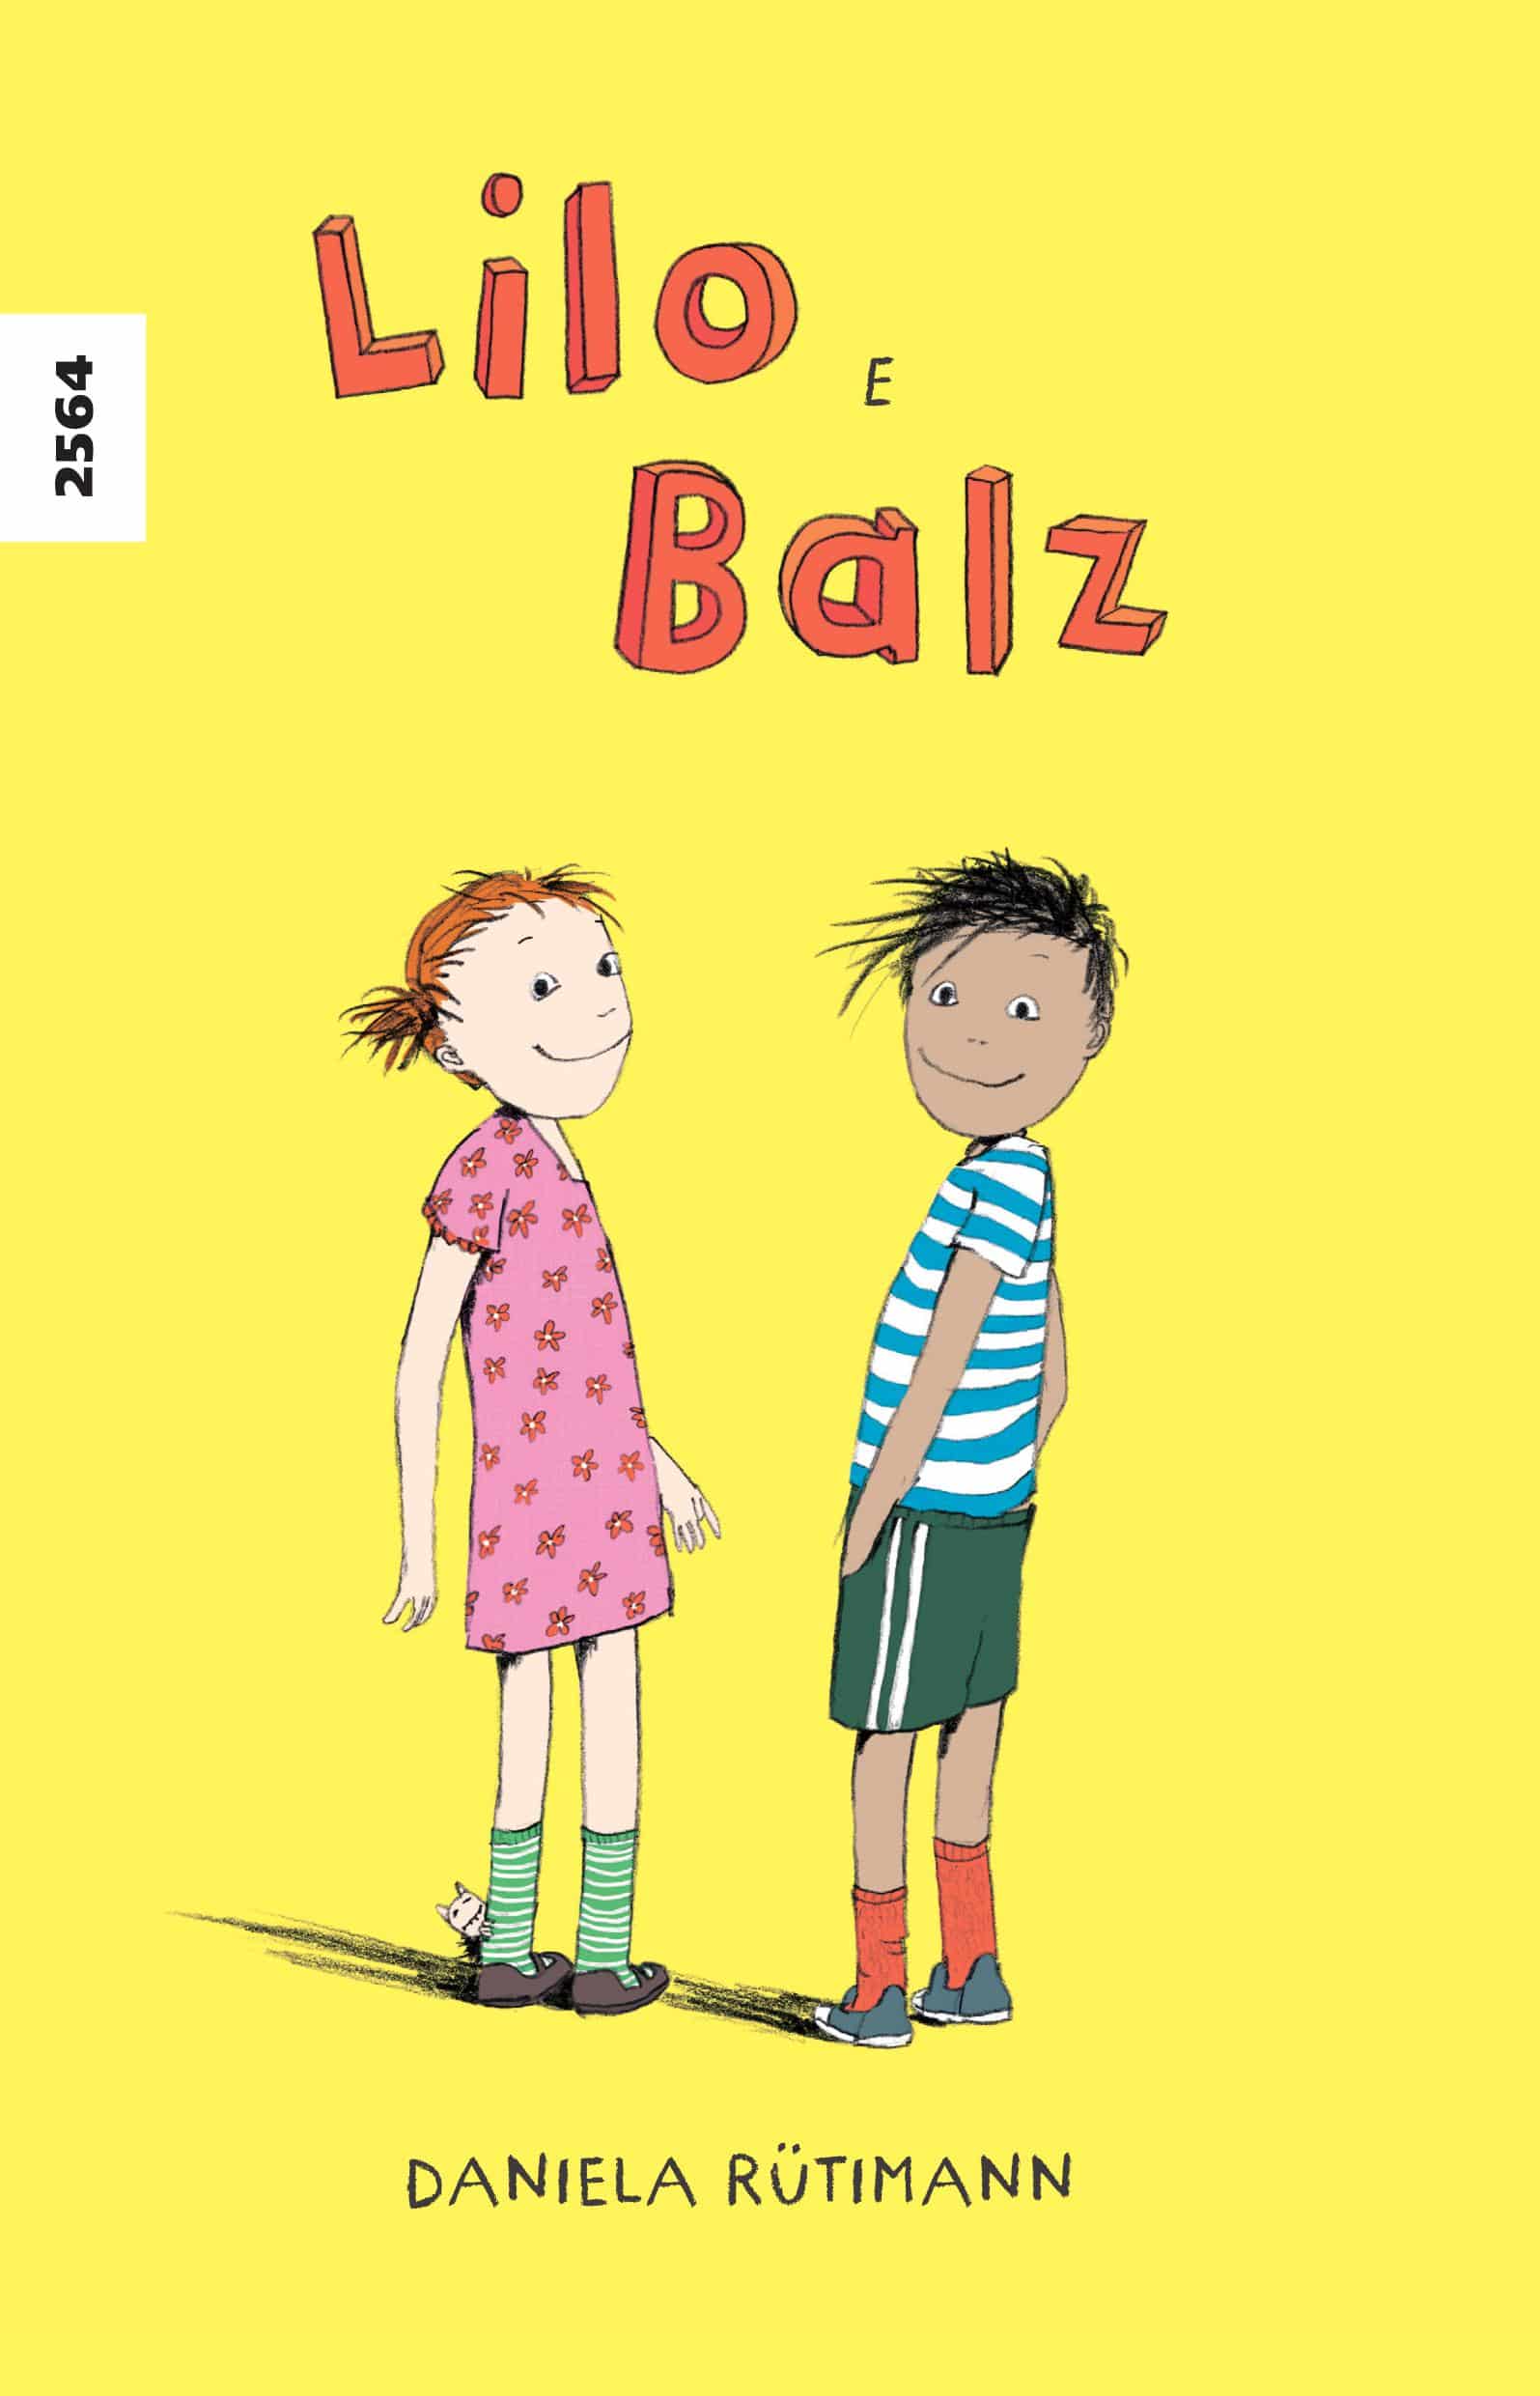 Lilo e Balz, ein Kinderbuch von Daniela Ruetimann, SJW Verlag, Comic